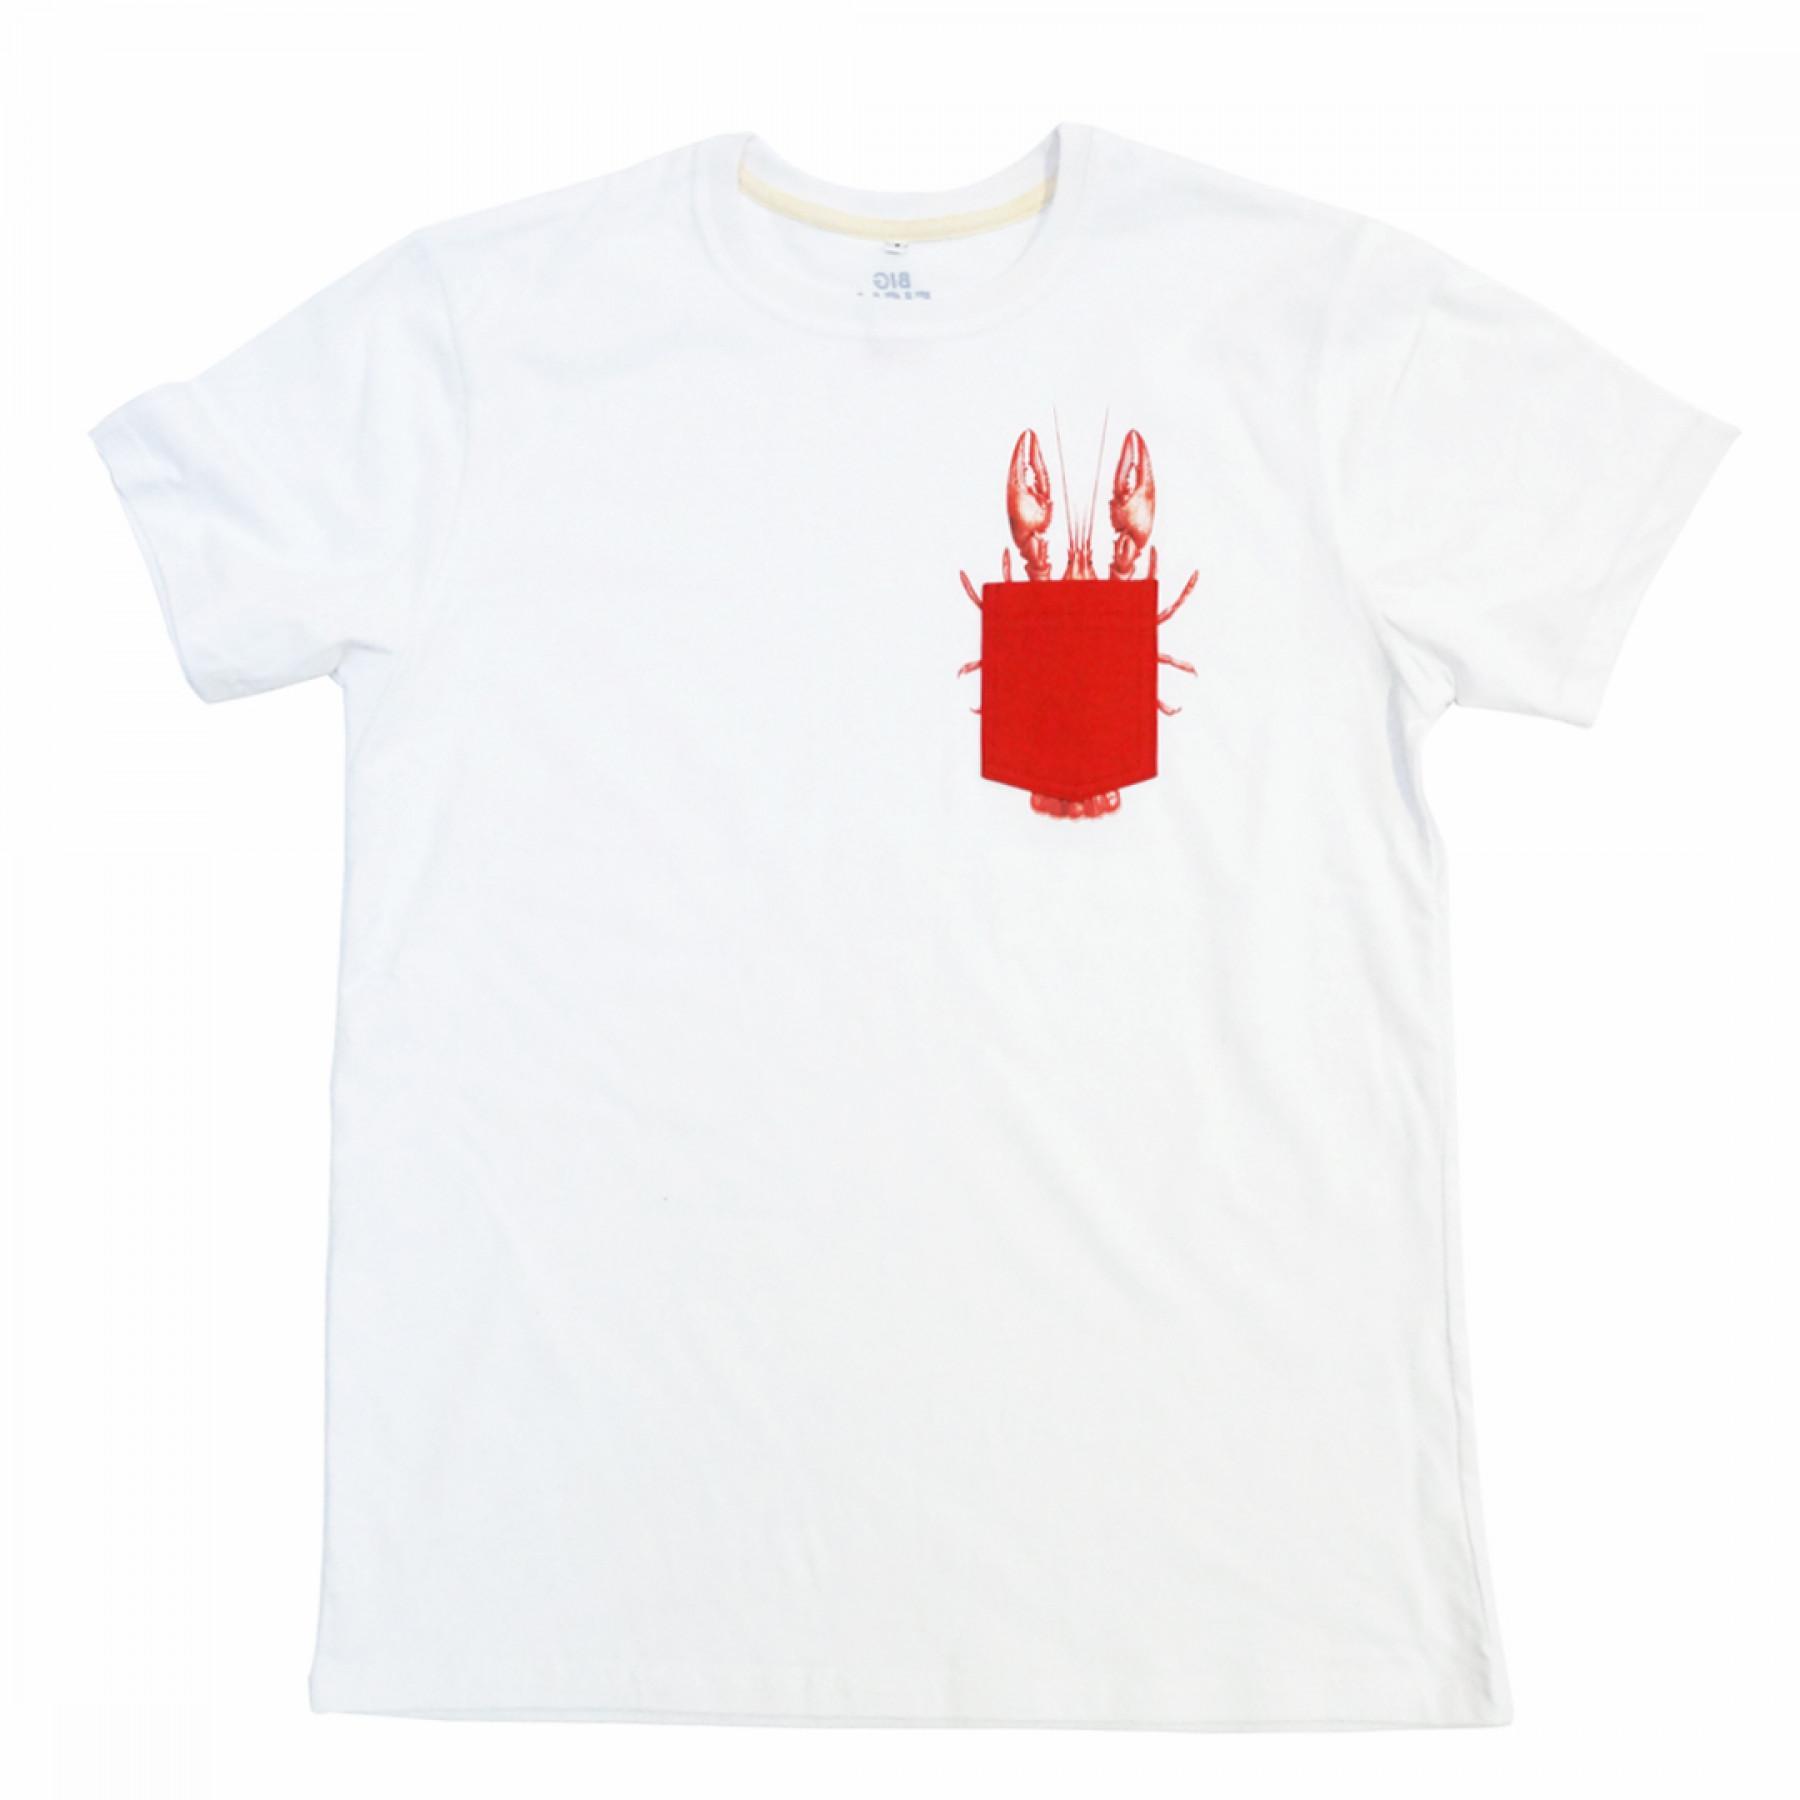 Lobster pocket T-shirt Big Fish